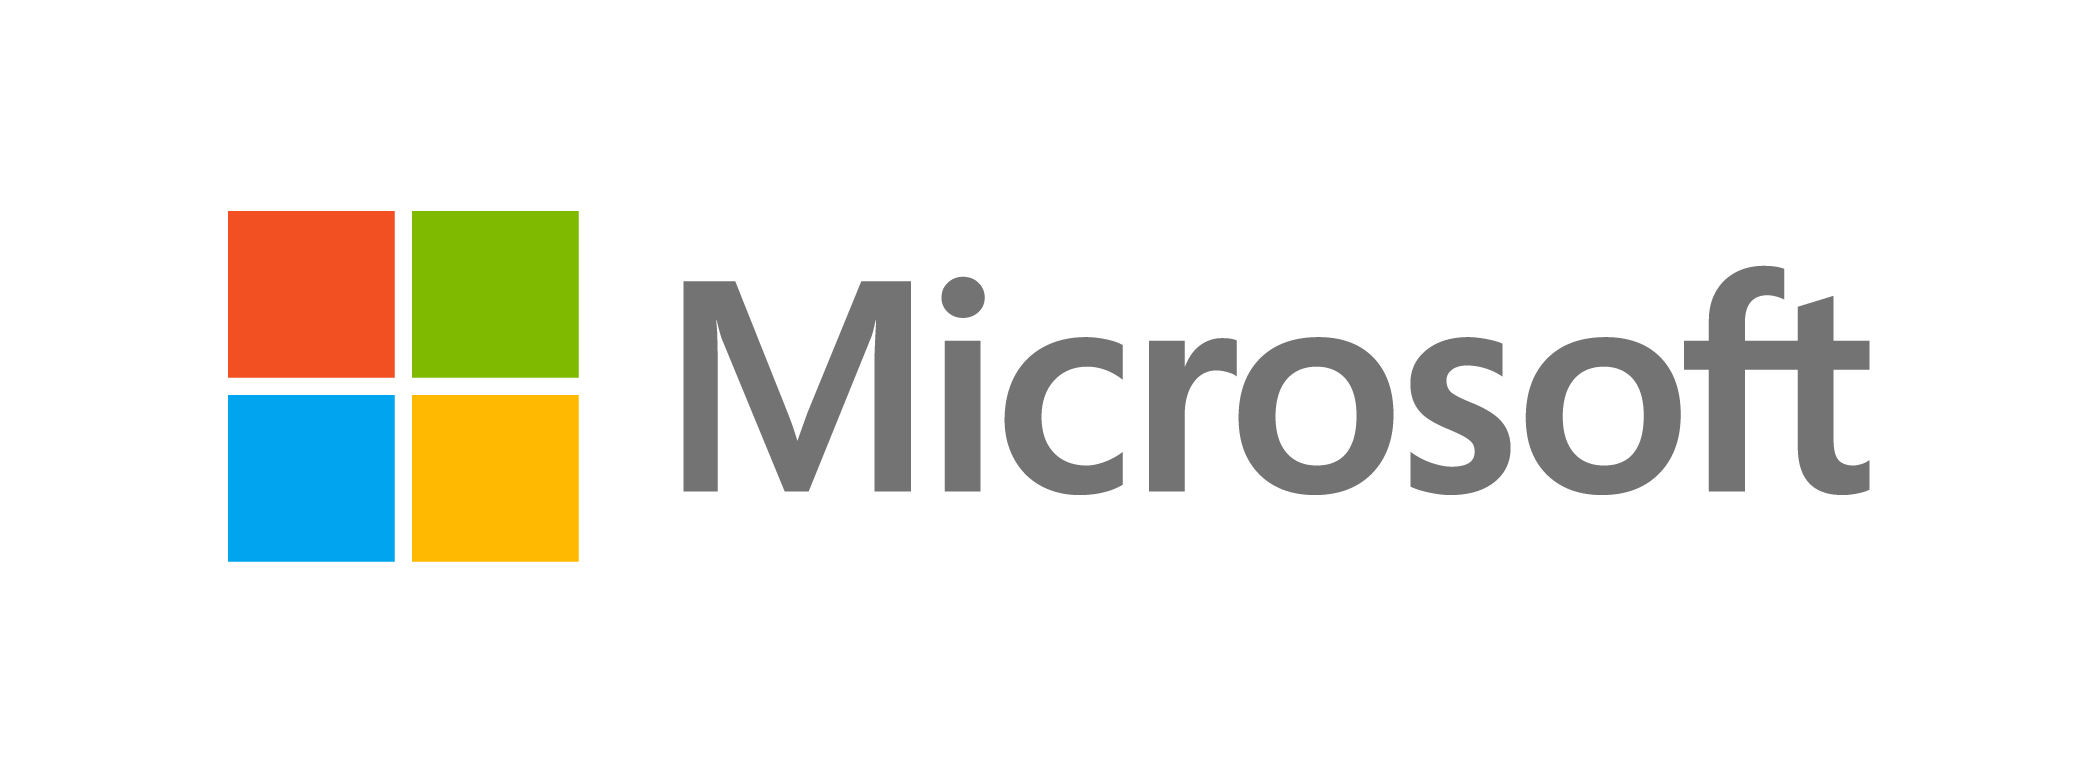 Download PNG image - Microsoft Logo Transparent Background 